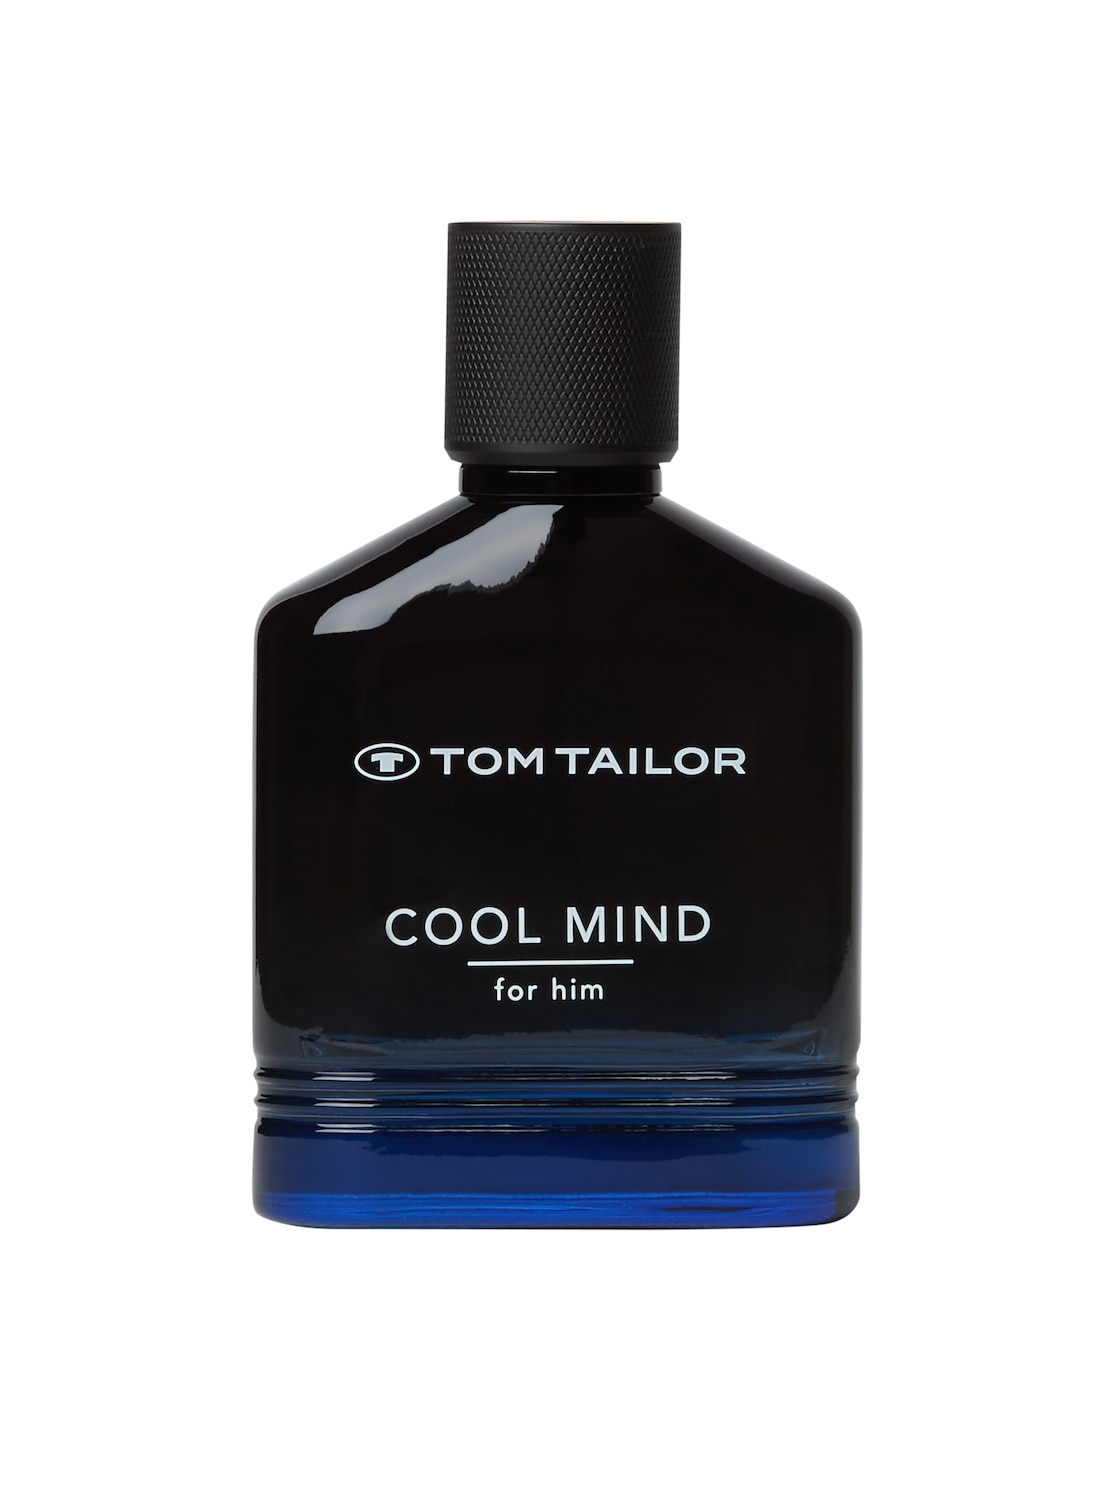 TOM TAILOR Herren Cool Mind for him EdT 50ml, bunt, Gr. 50ml von Tom Tailor